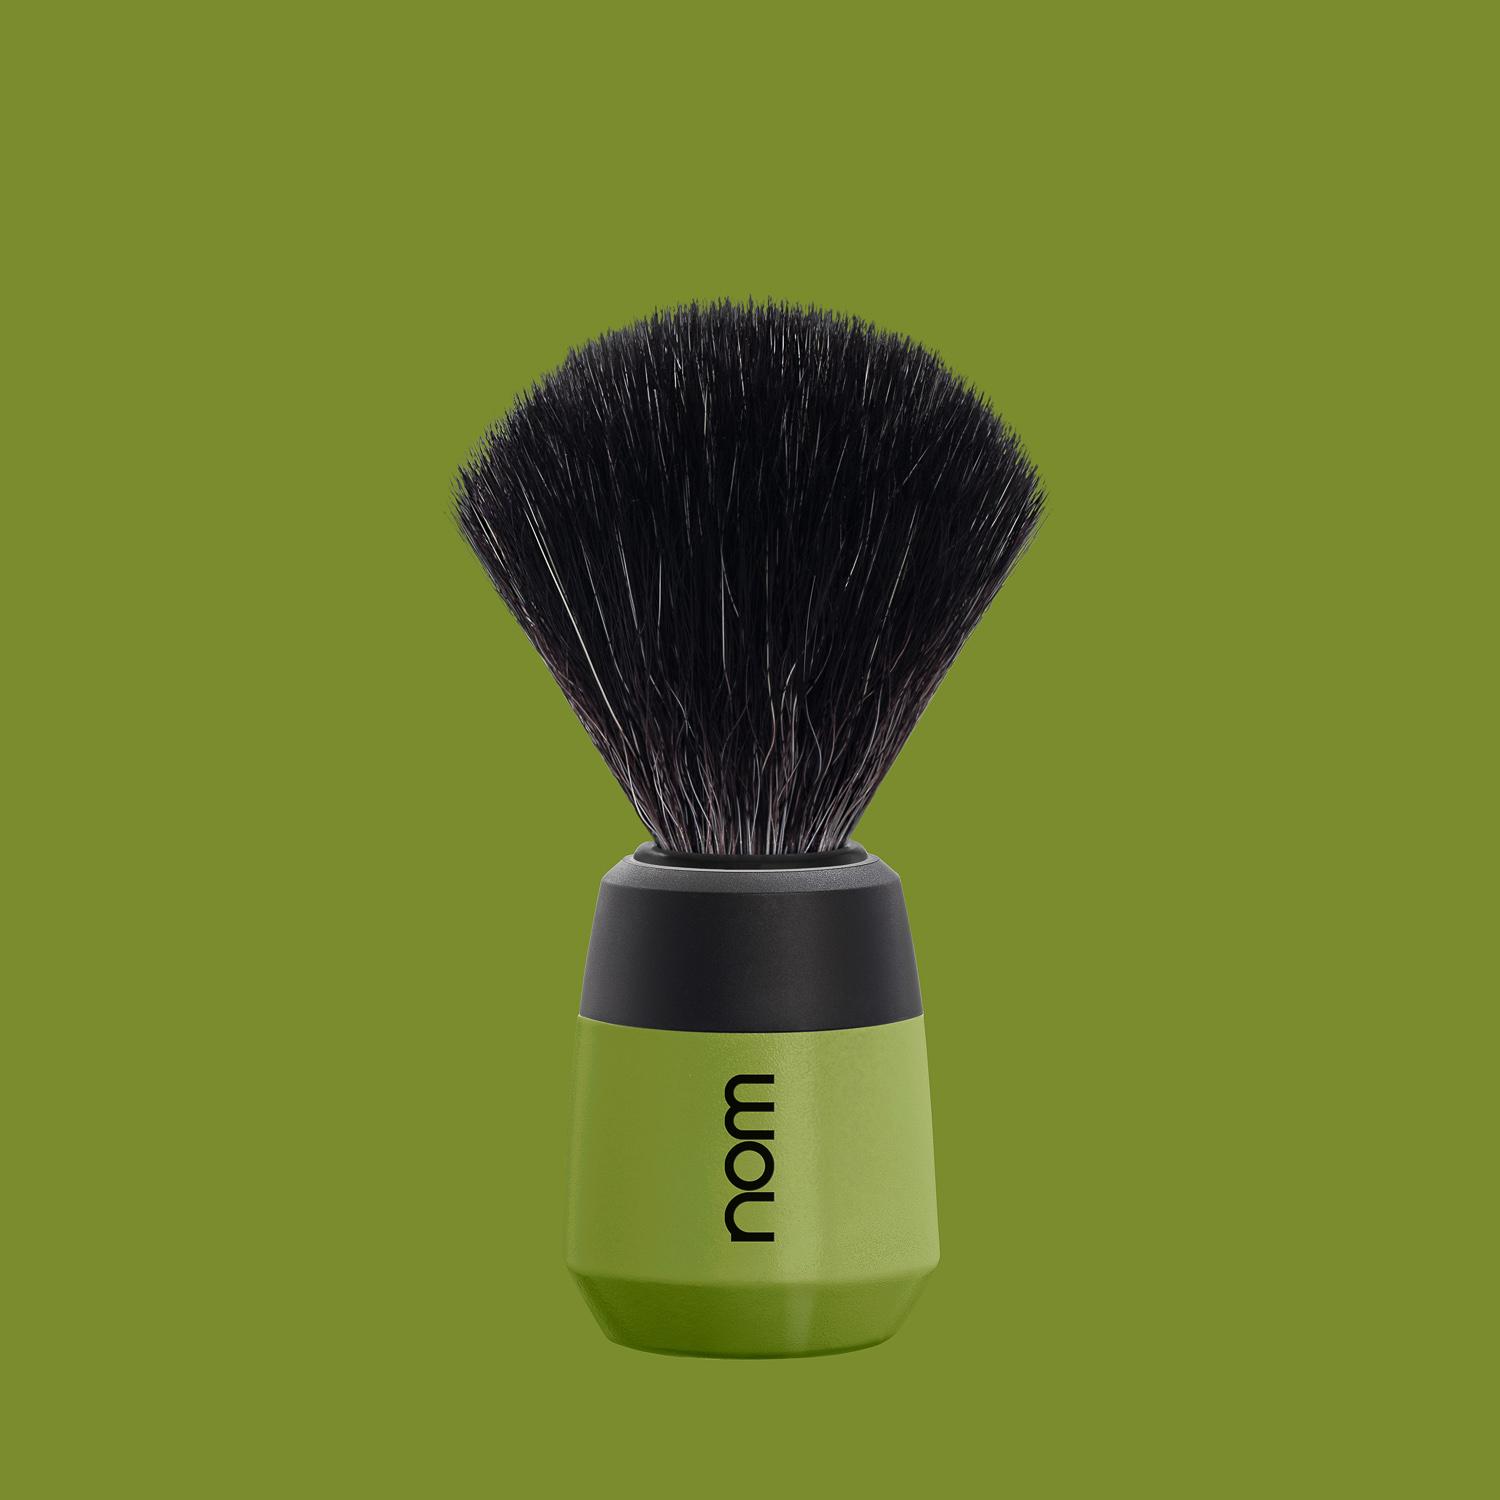 nom MAX, Olive, Black Fibre Shaving Brush